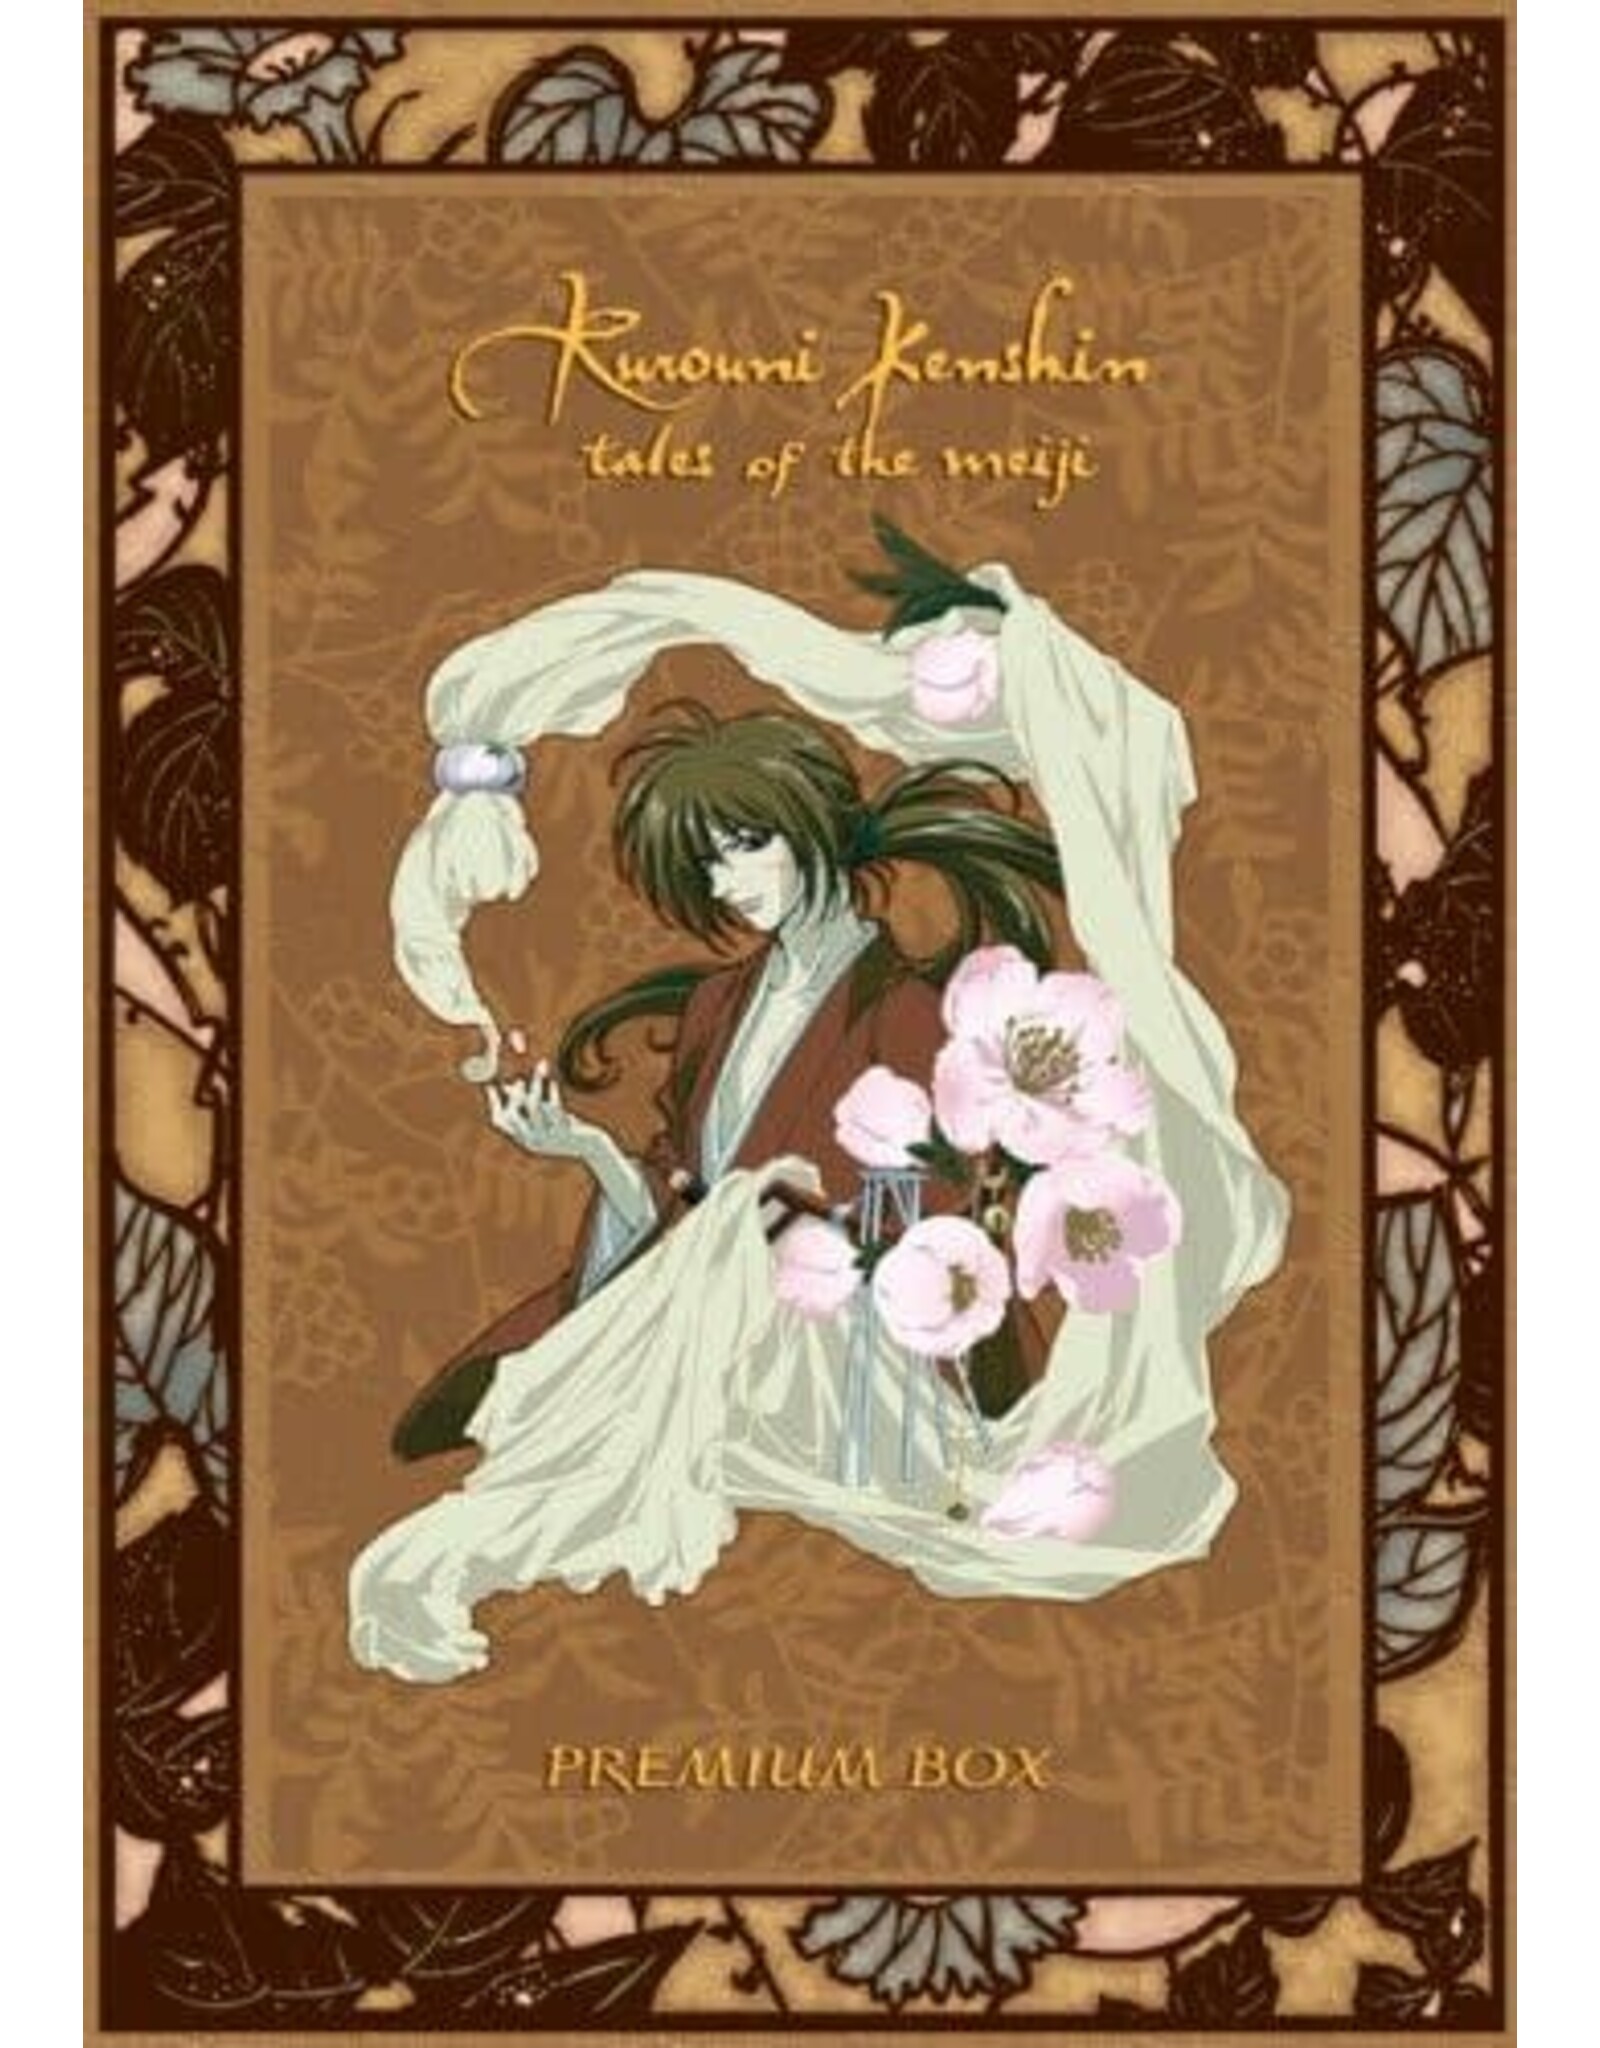 Anime & Animation Rurouni Kenshin Tales of the Meiji Premium Boxset (Used)